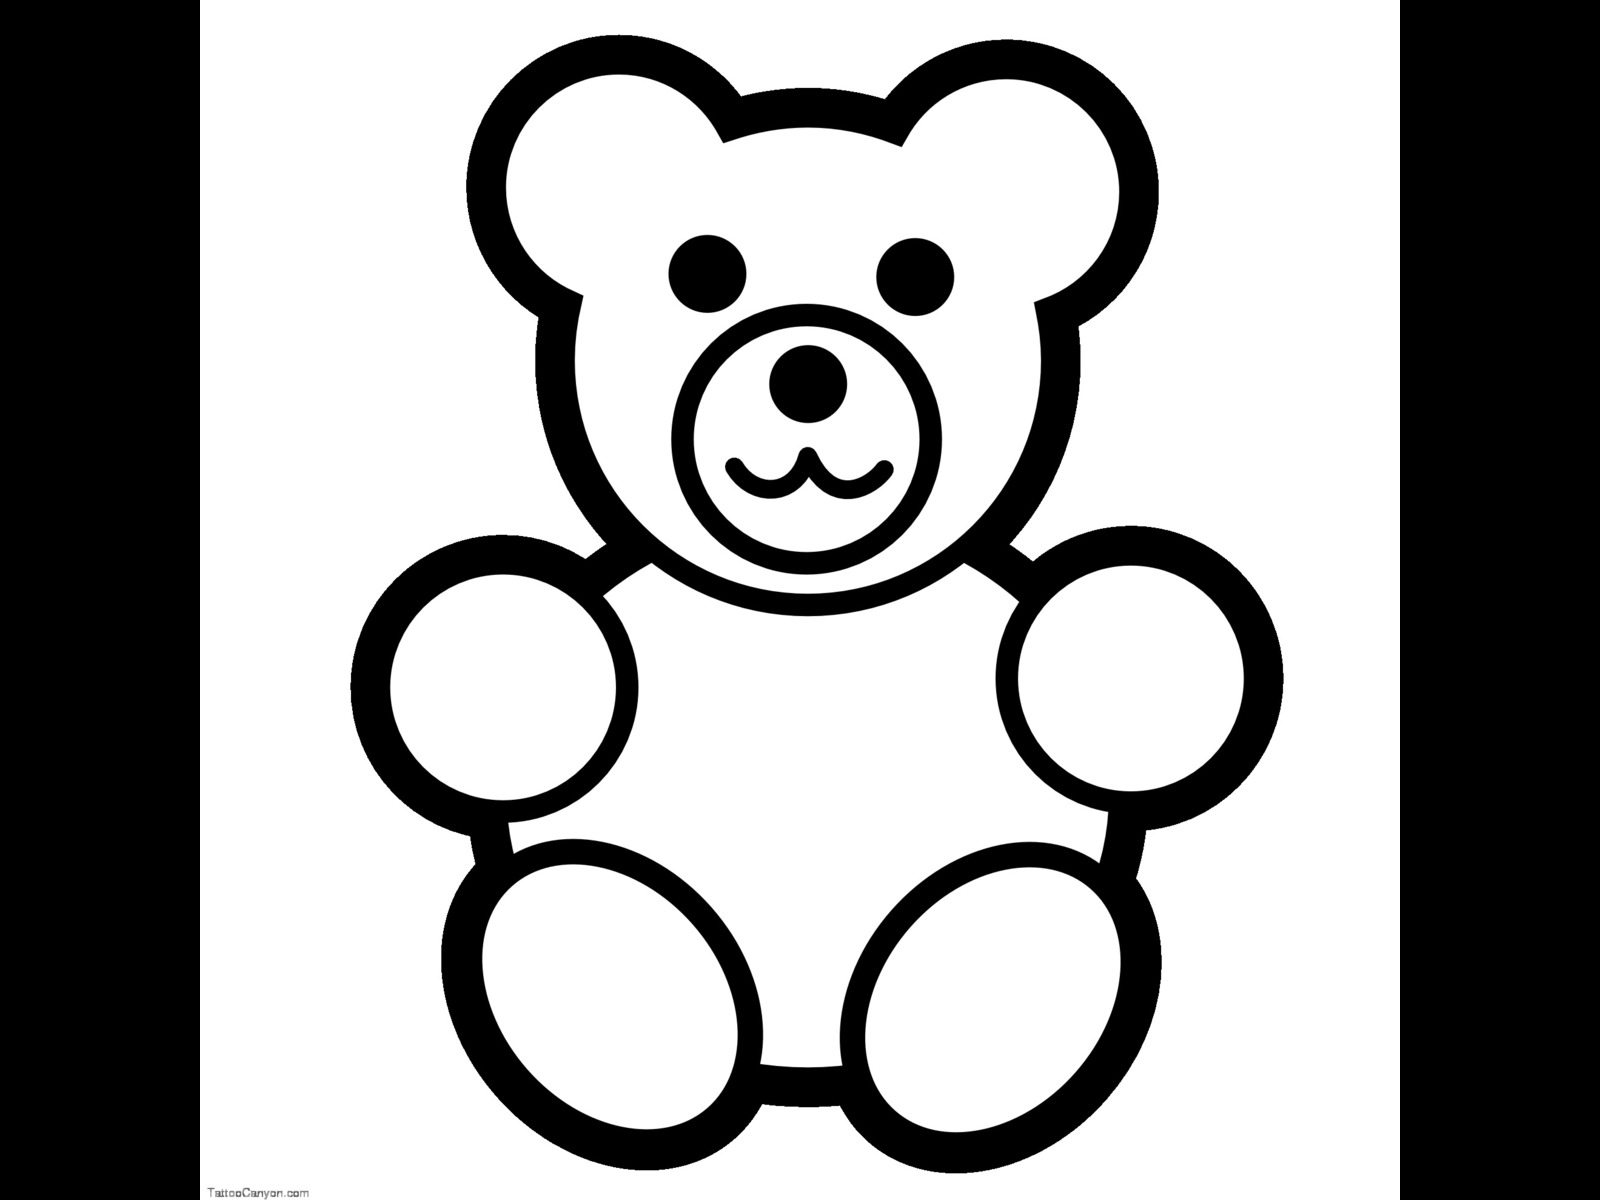 How to Draw a Teddy Bear | Nil Tech - shop.nil-tech